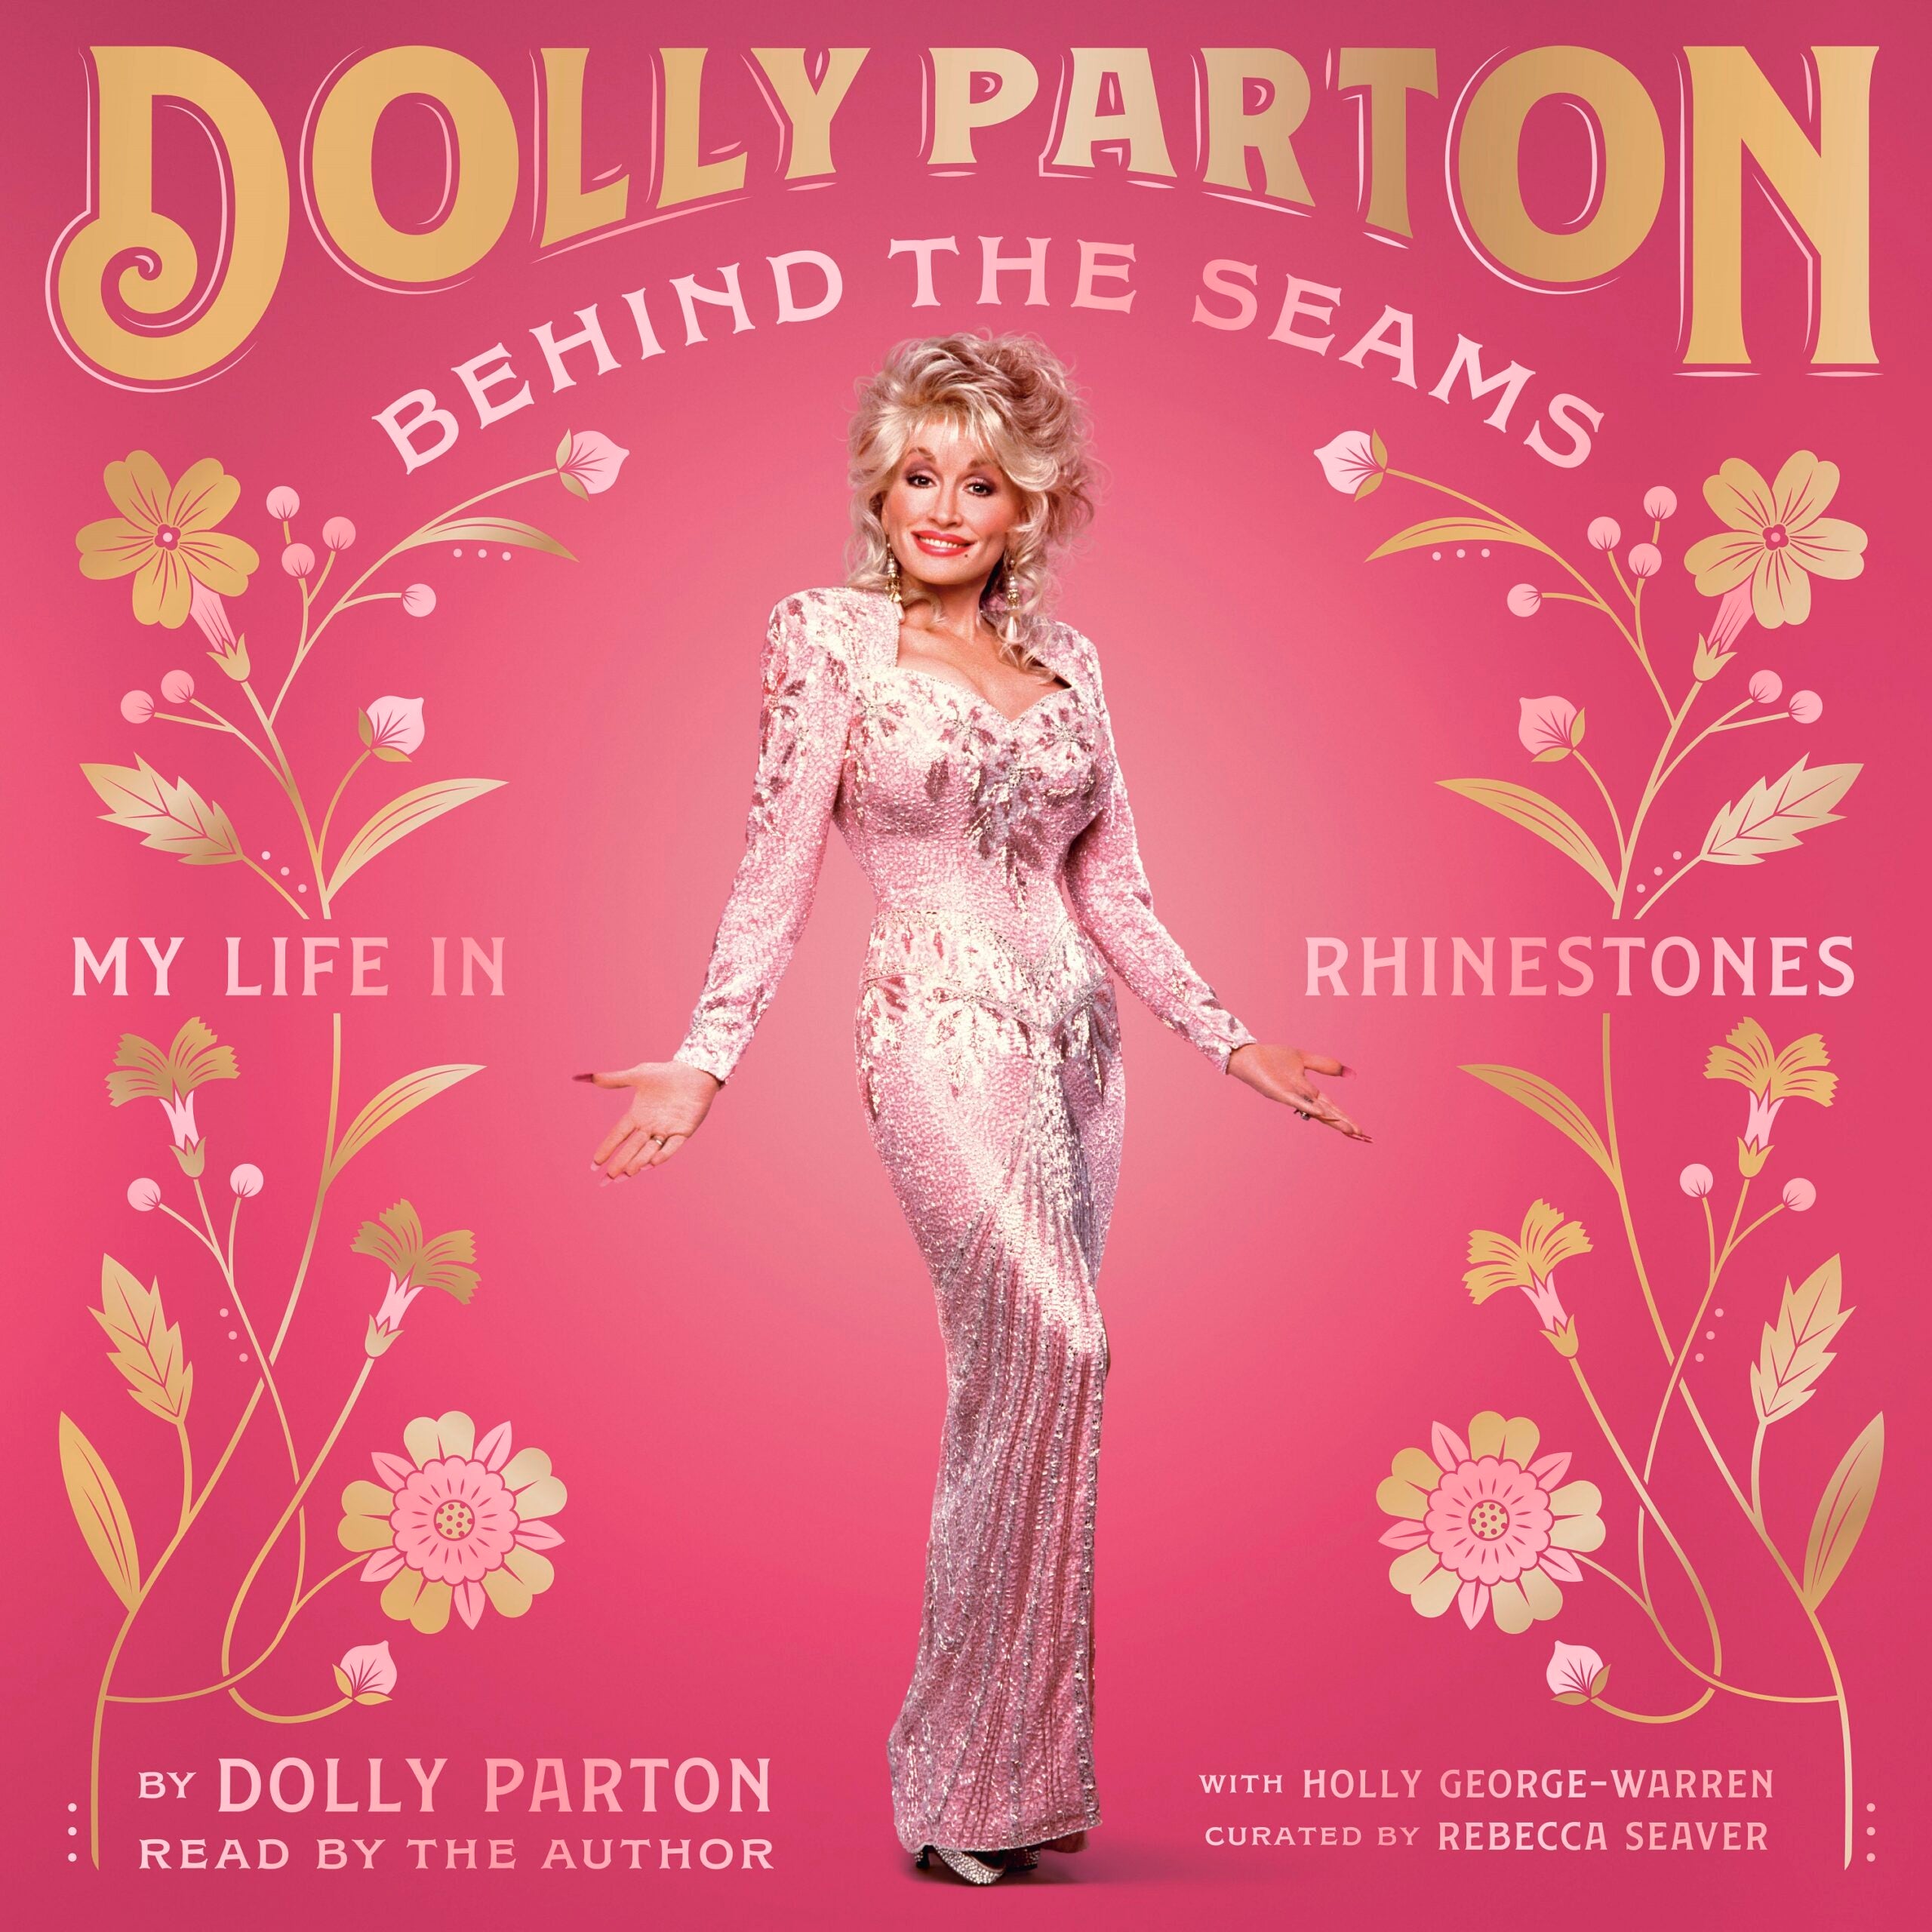 Coming October 17: Behind the Seams by Dolly Parton